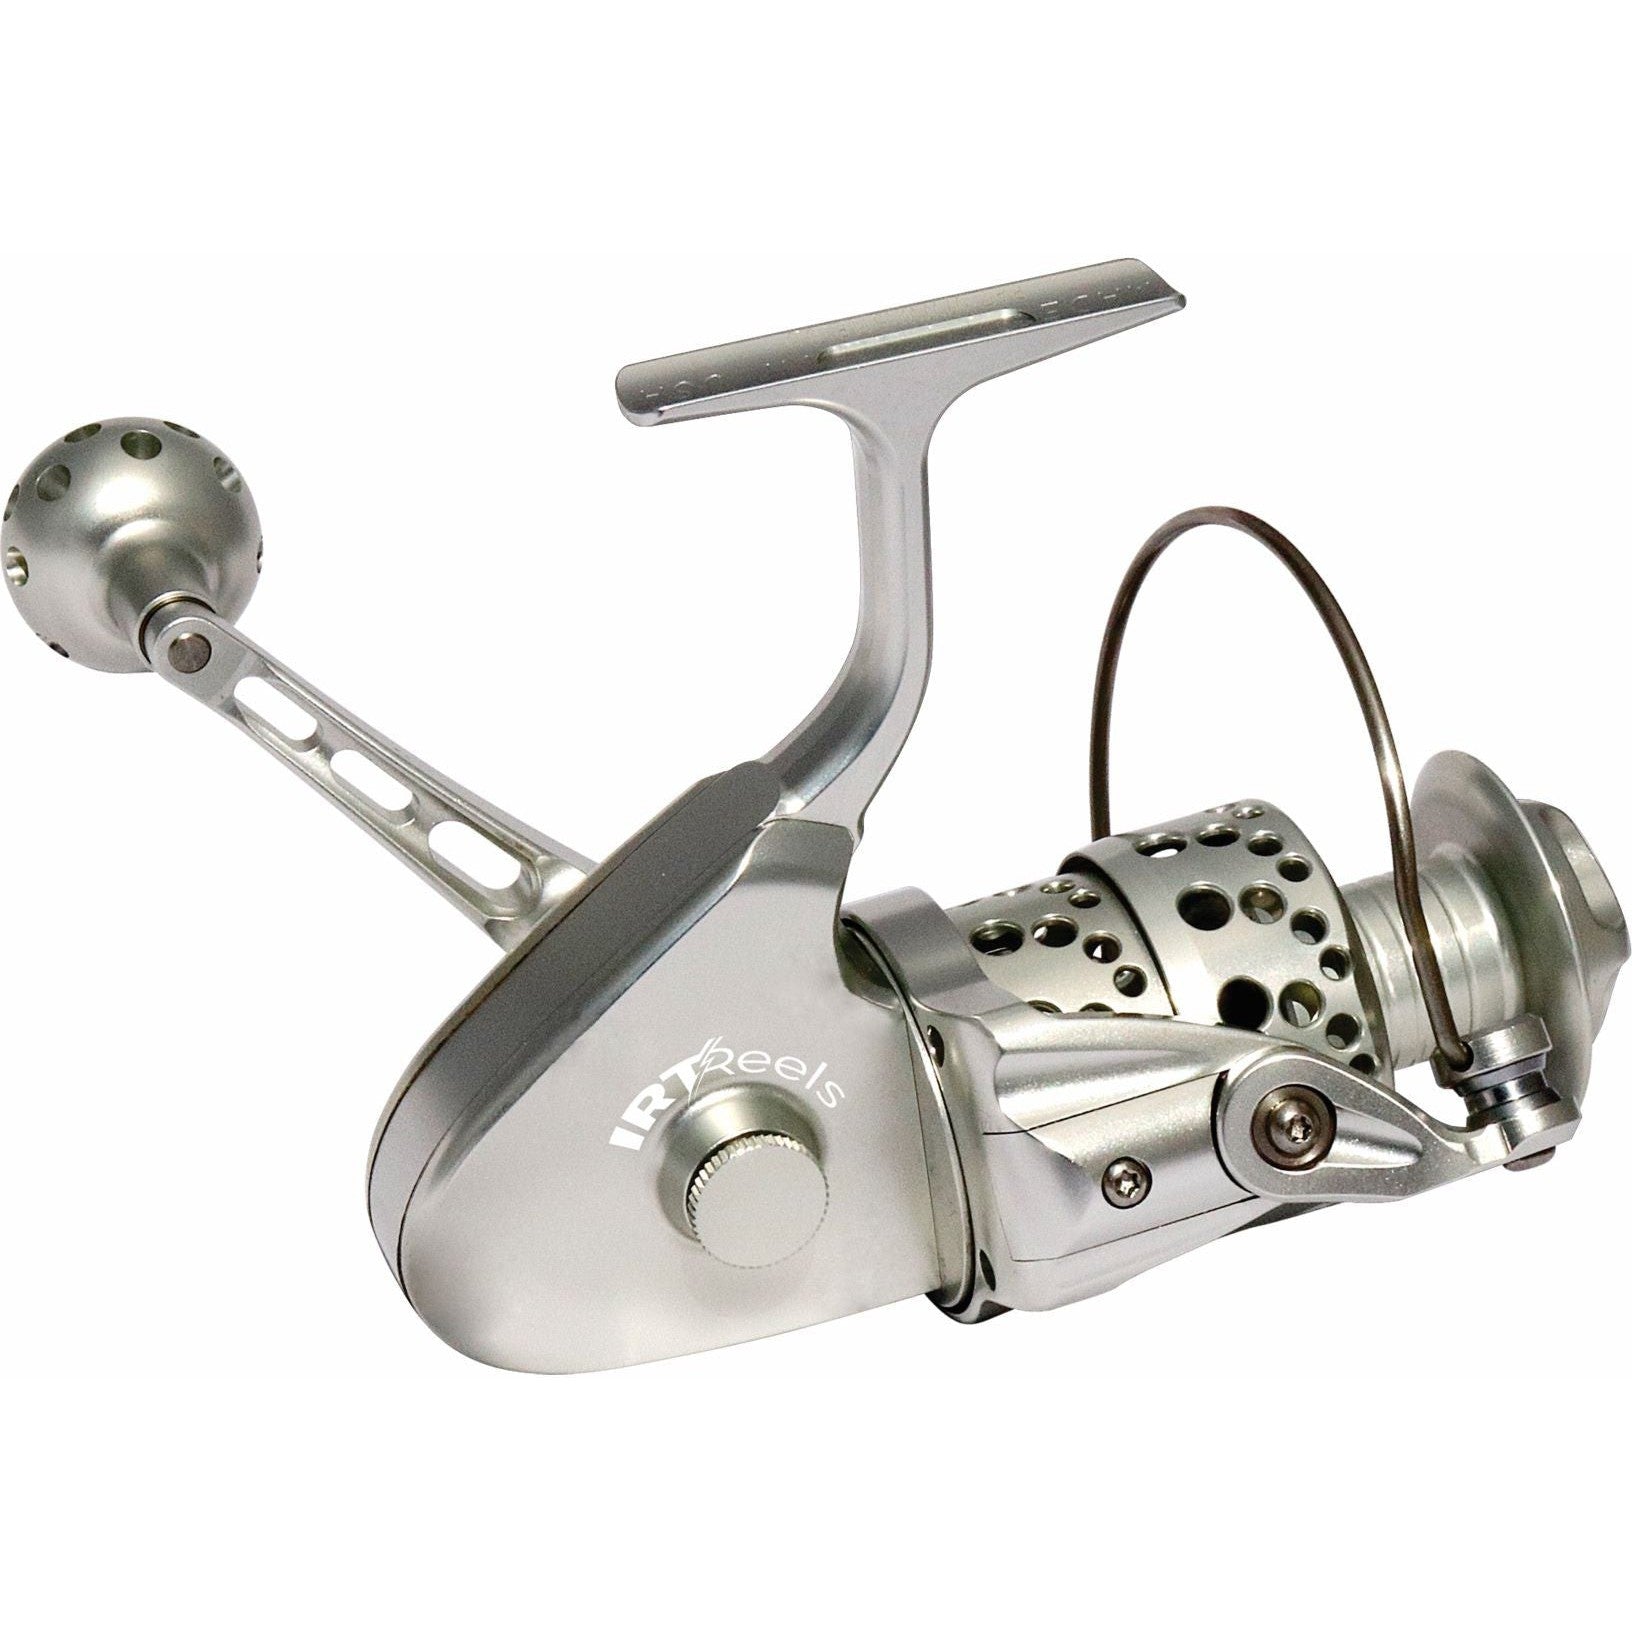 Vivoice Fishing Reel Small Spinning Reels Ultralight Spinning Fishing Reel  for 200